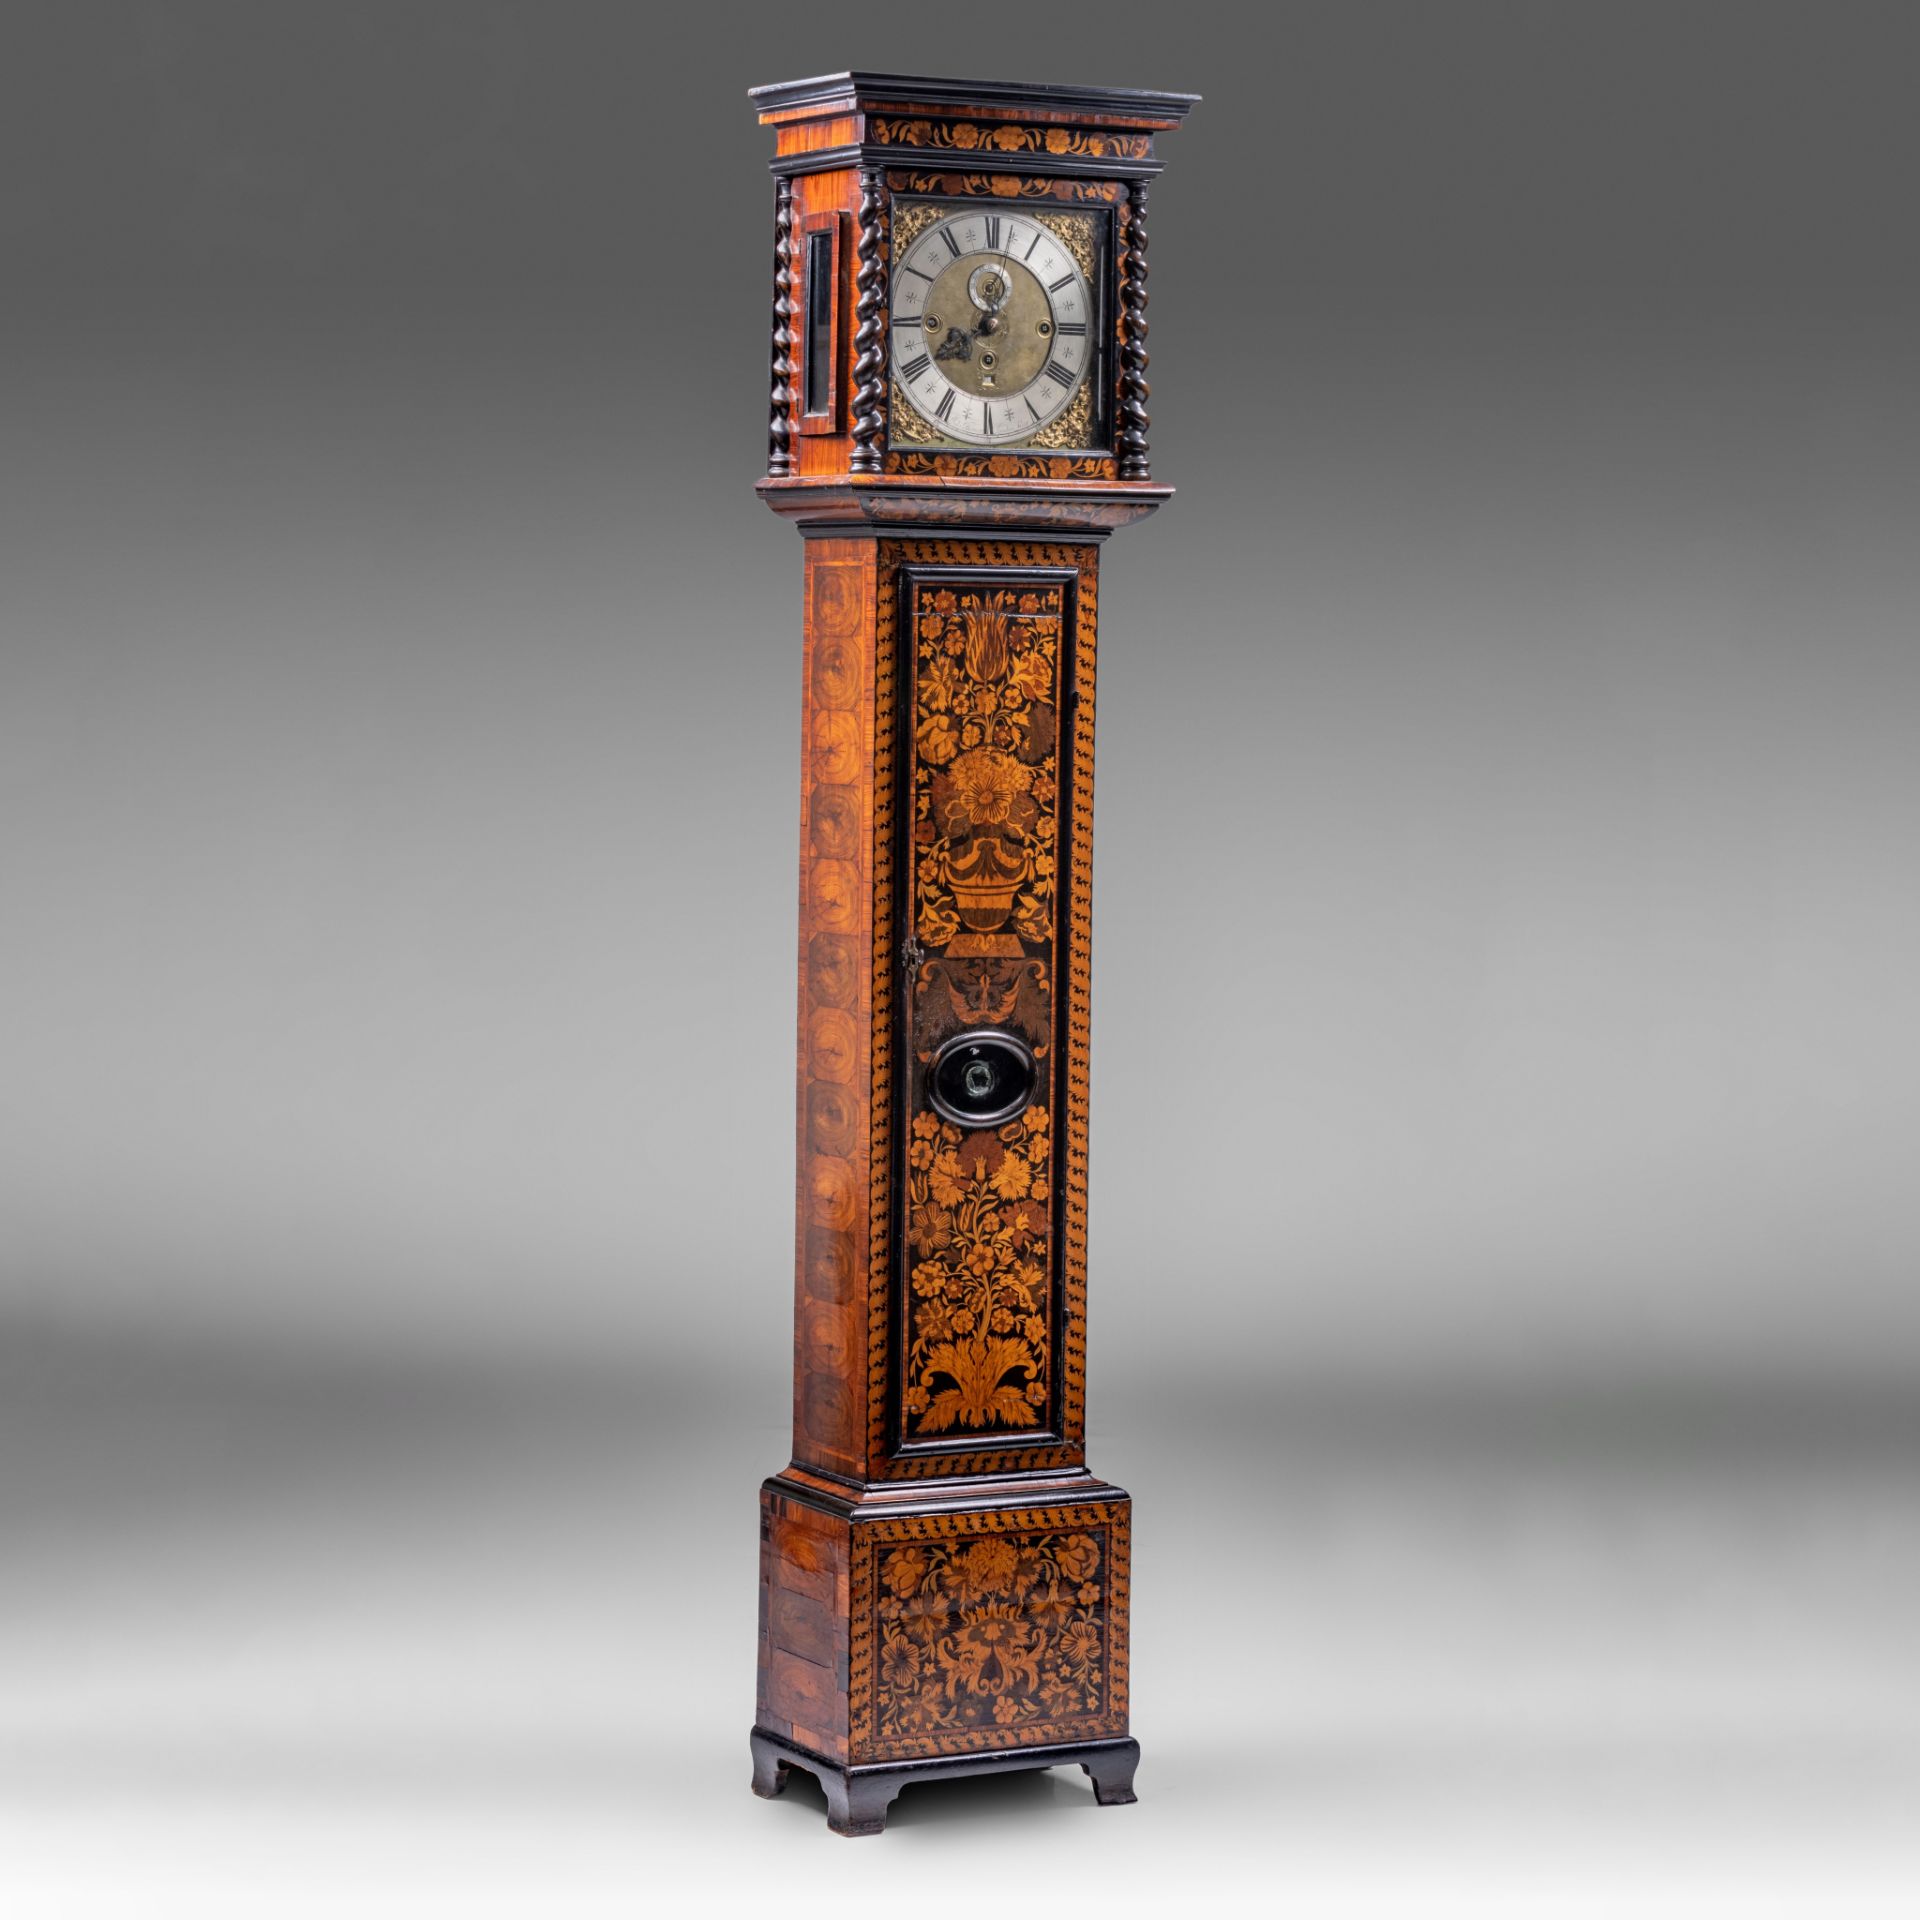 An exceptional William & Mary longcase clock by John Barnett, Lothbury, London, ca. 1690-1700, H 212